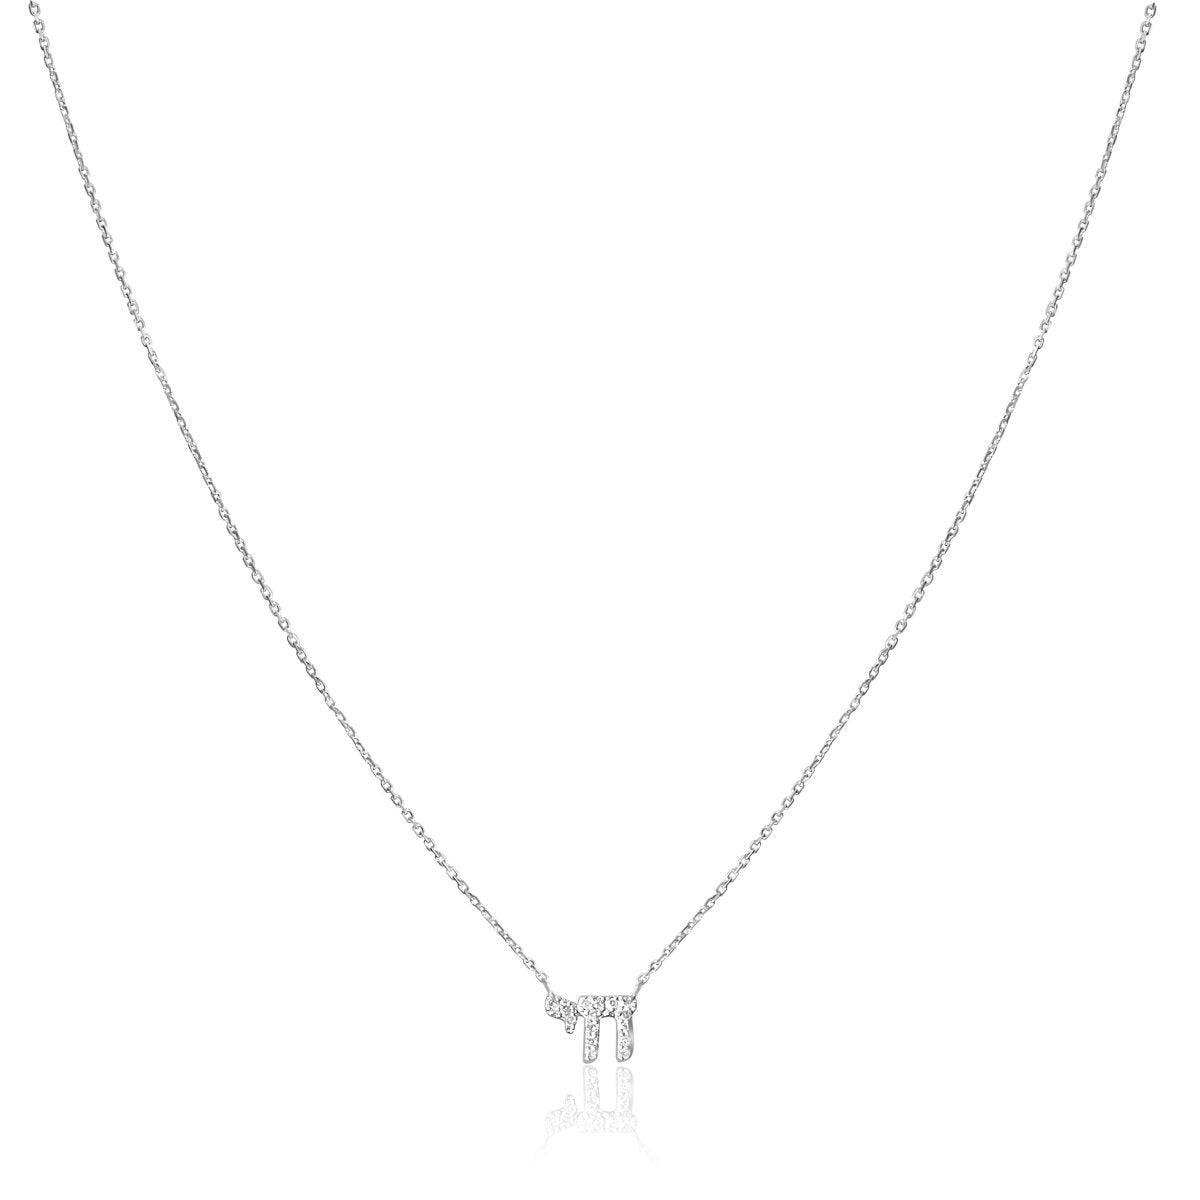 Diamond Chai Hebrew Necklace in 14k Gold